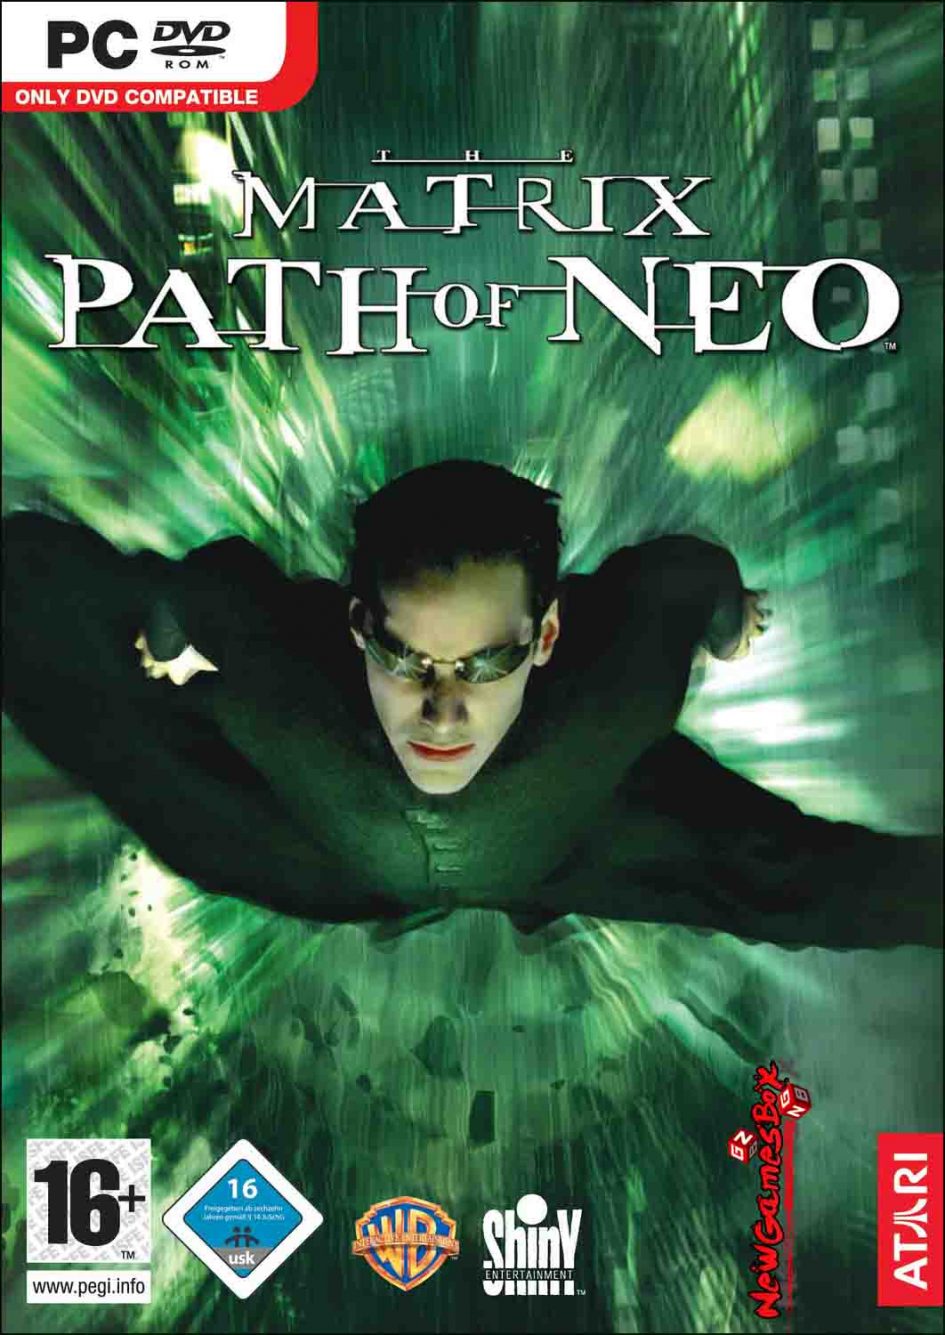 Matrix Path Of Neo Mac Download